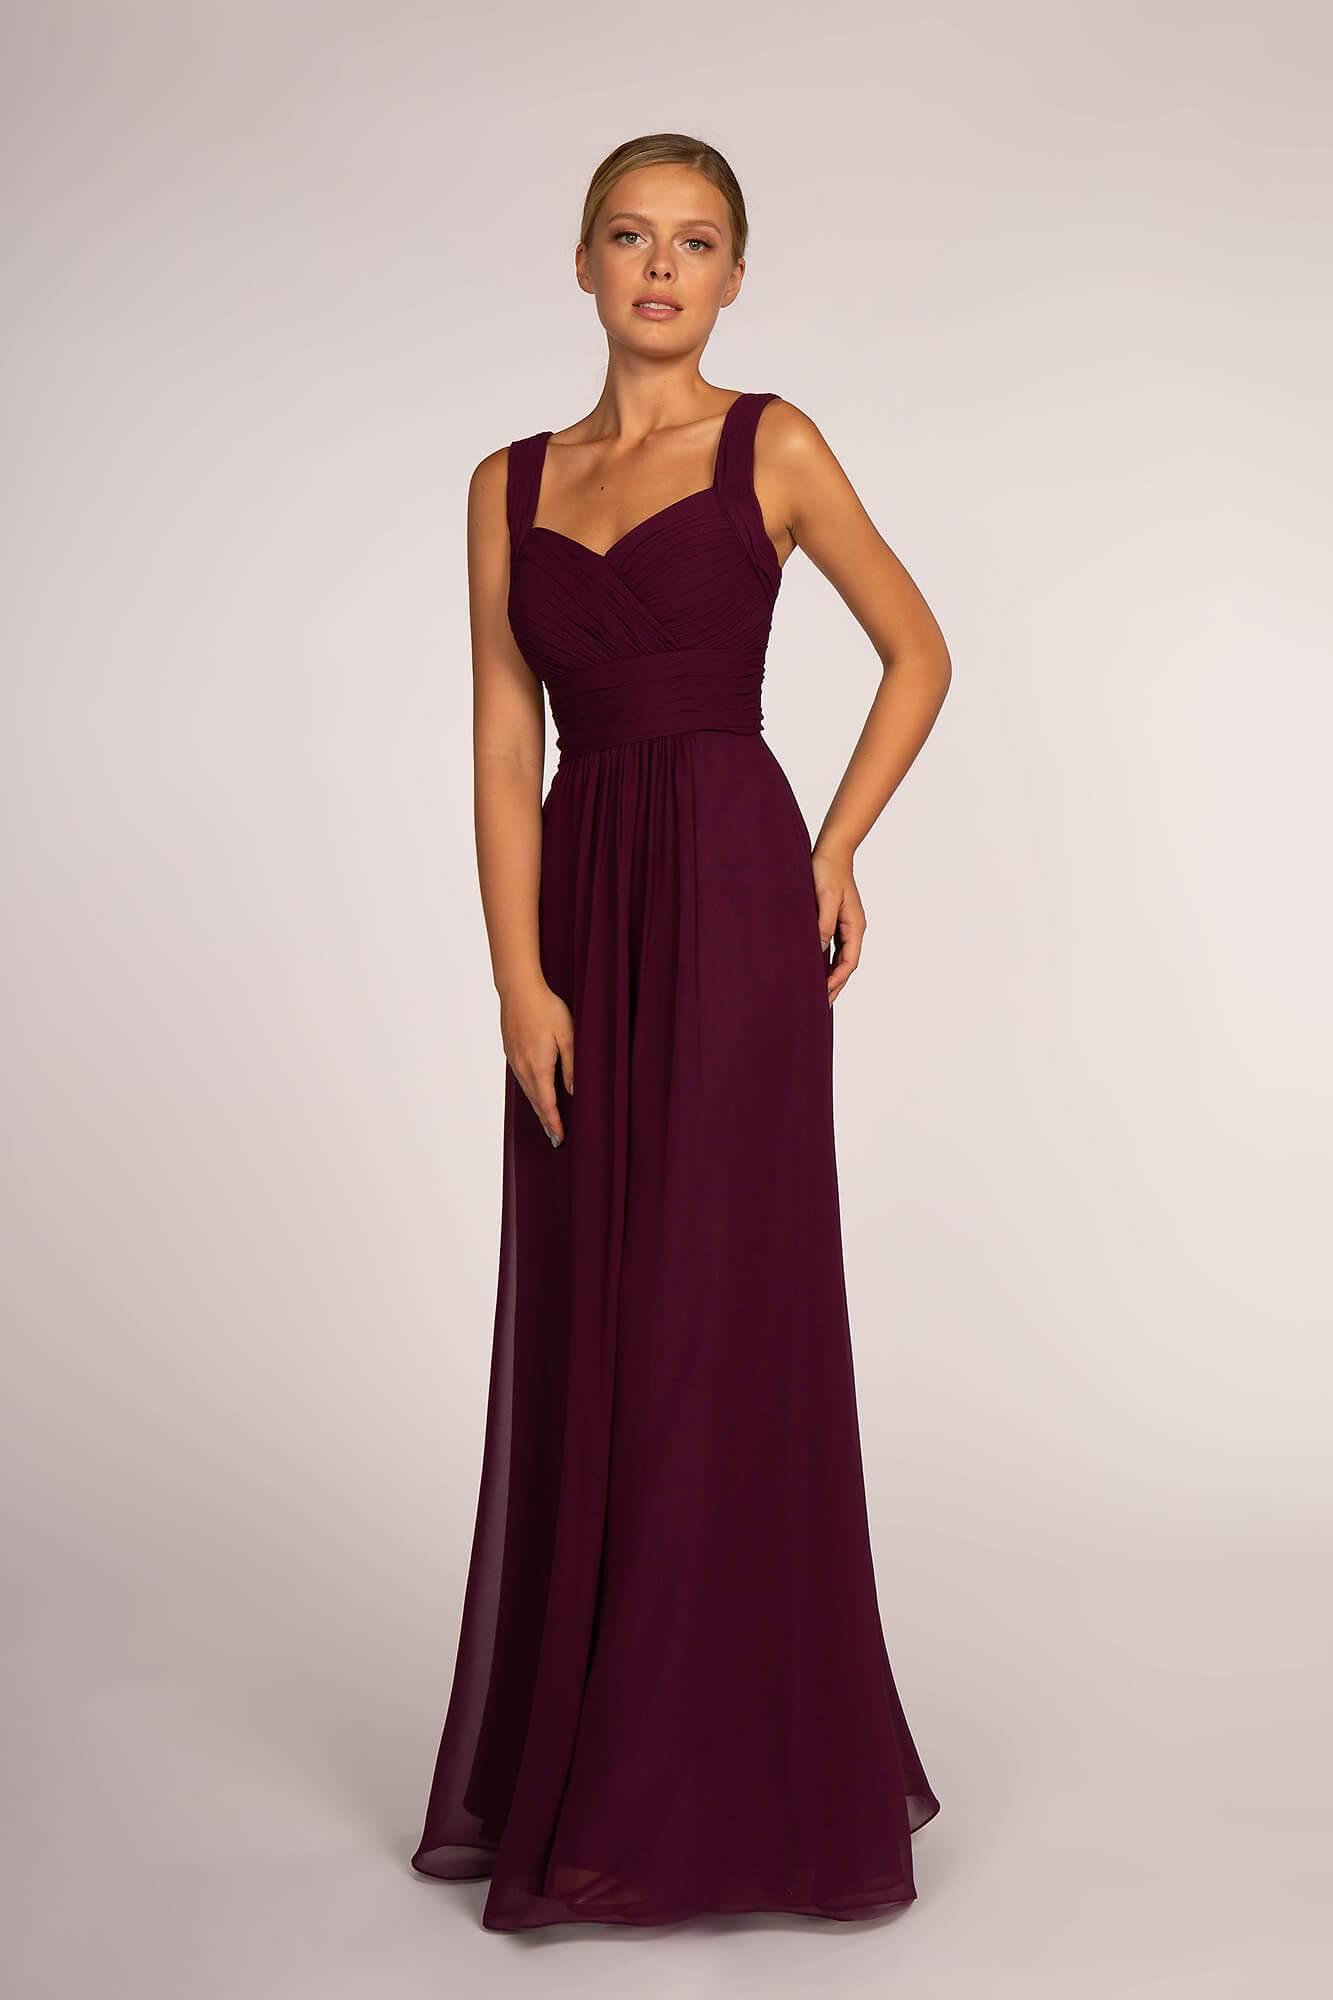 Long Formal Sleeveless Dress Sale - The Dress Outlet